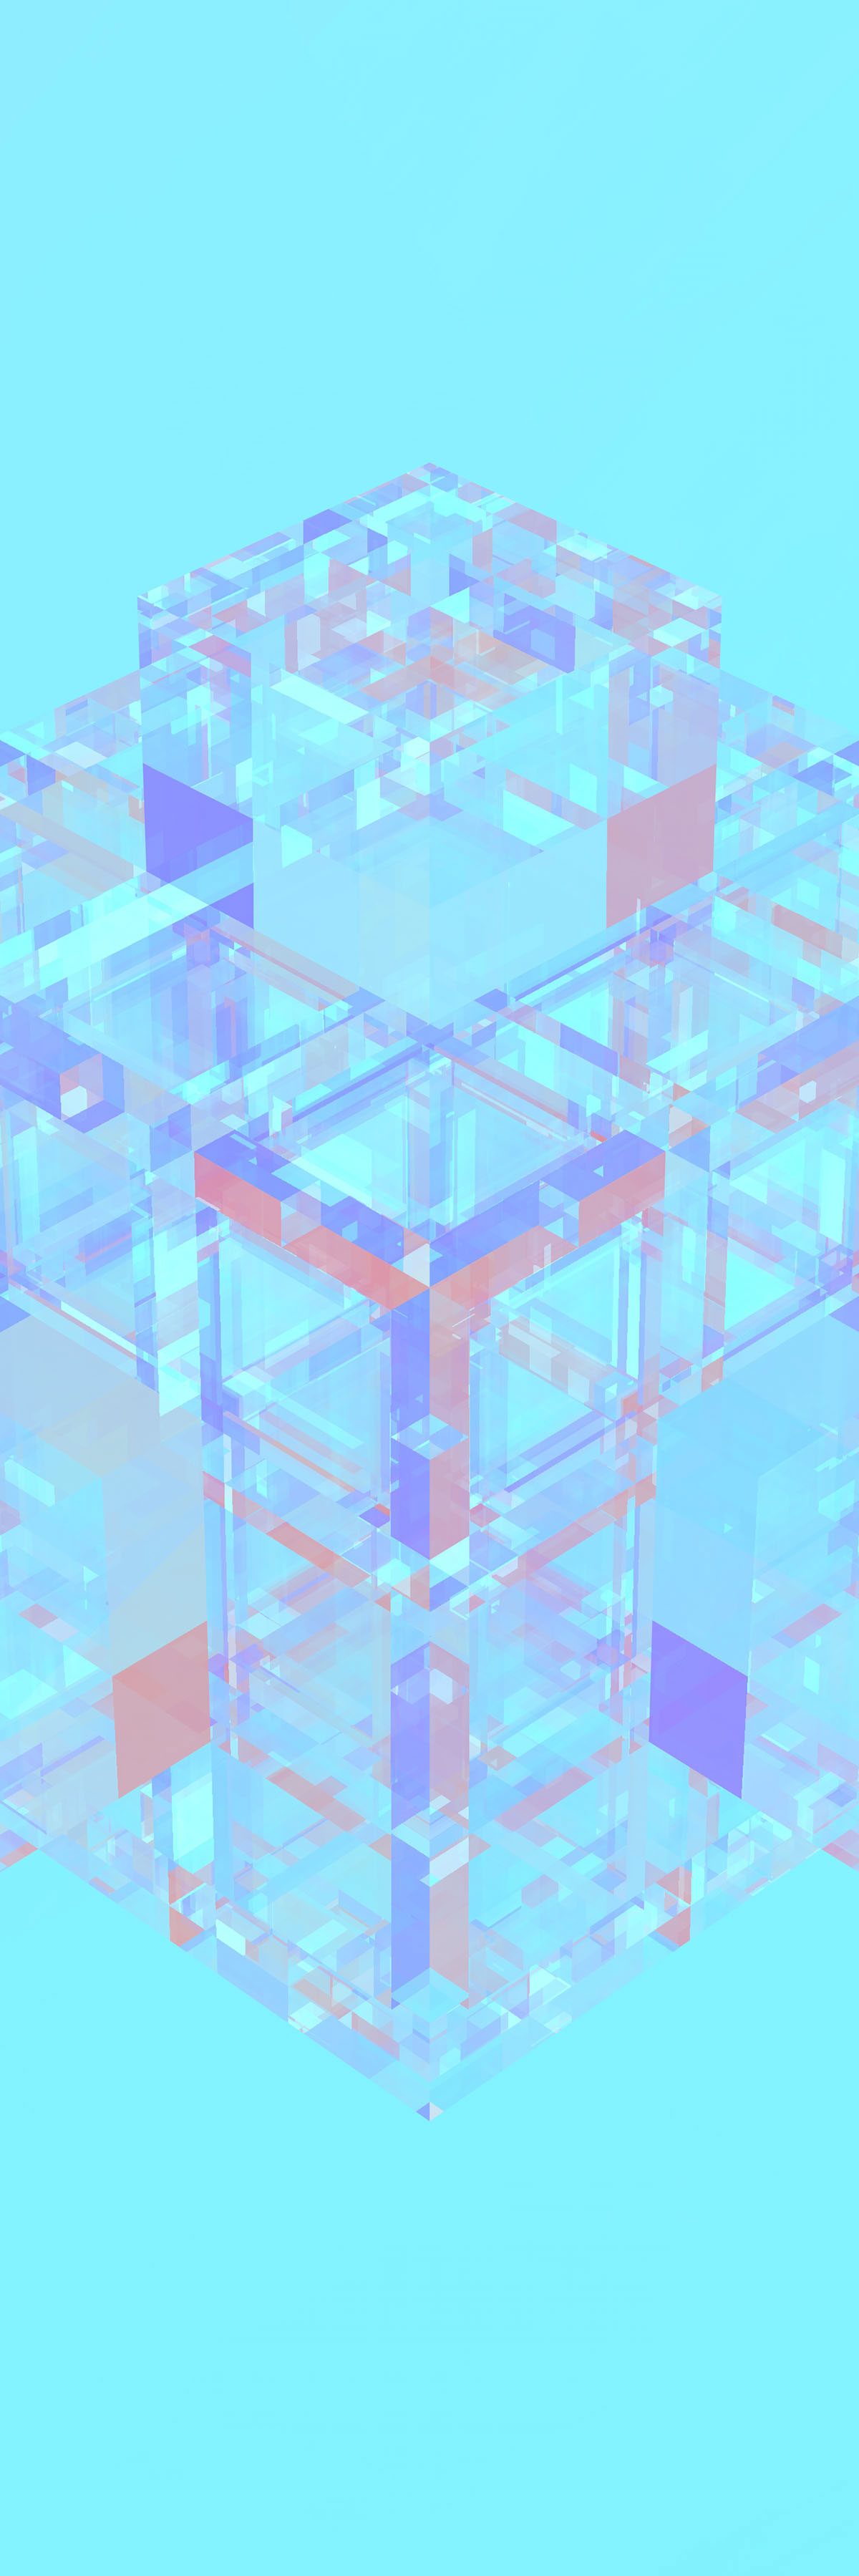 kaleidoscope experimental 3D cinema4d crystal solid platonic free Wallpapers 5k